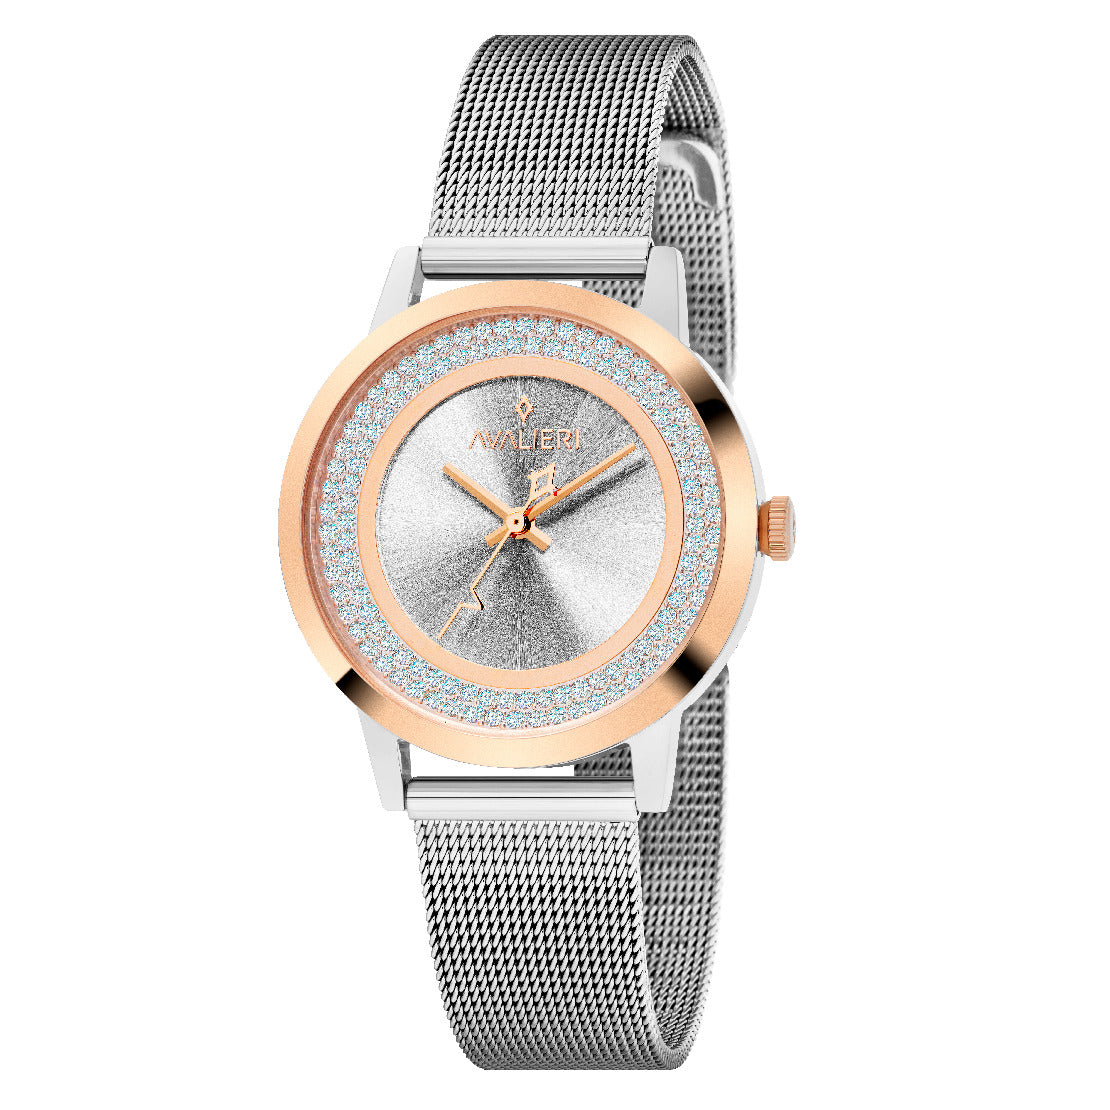 Avalieri Women's Quartz Watch, Silver Dial and Rose Gold - AV-2541B